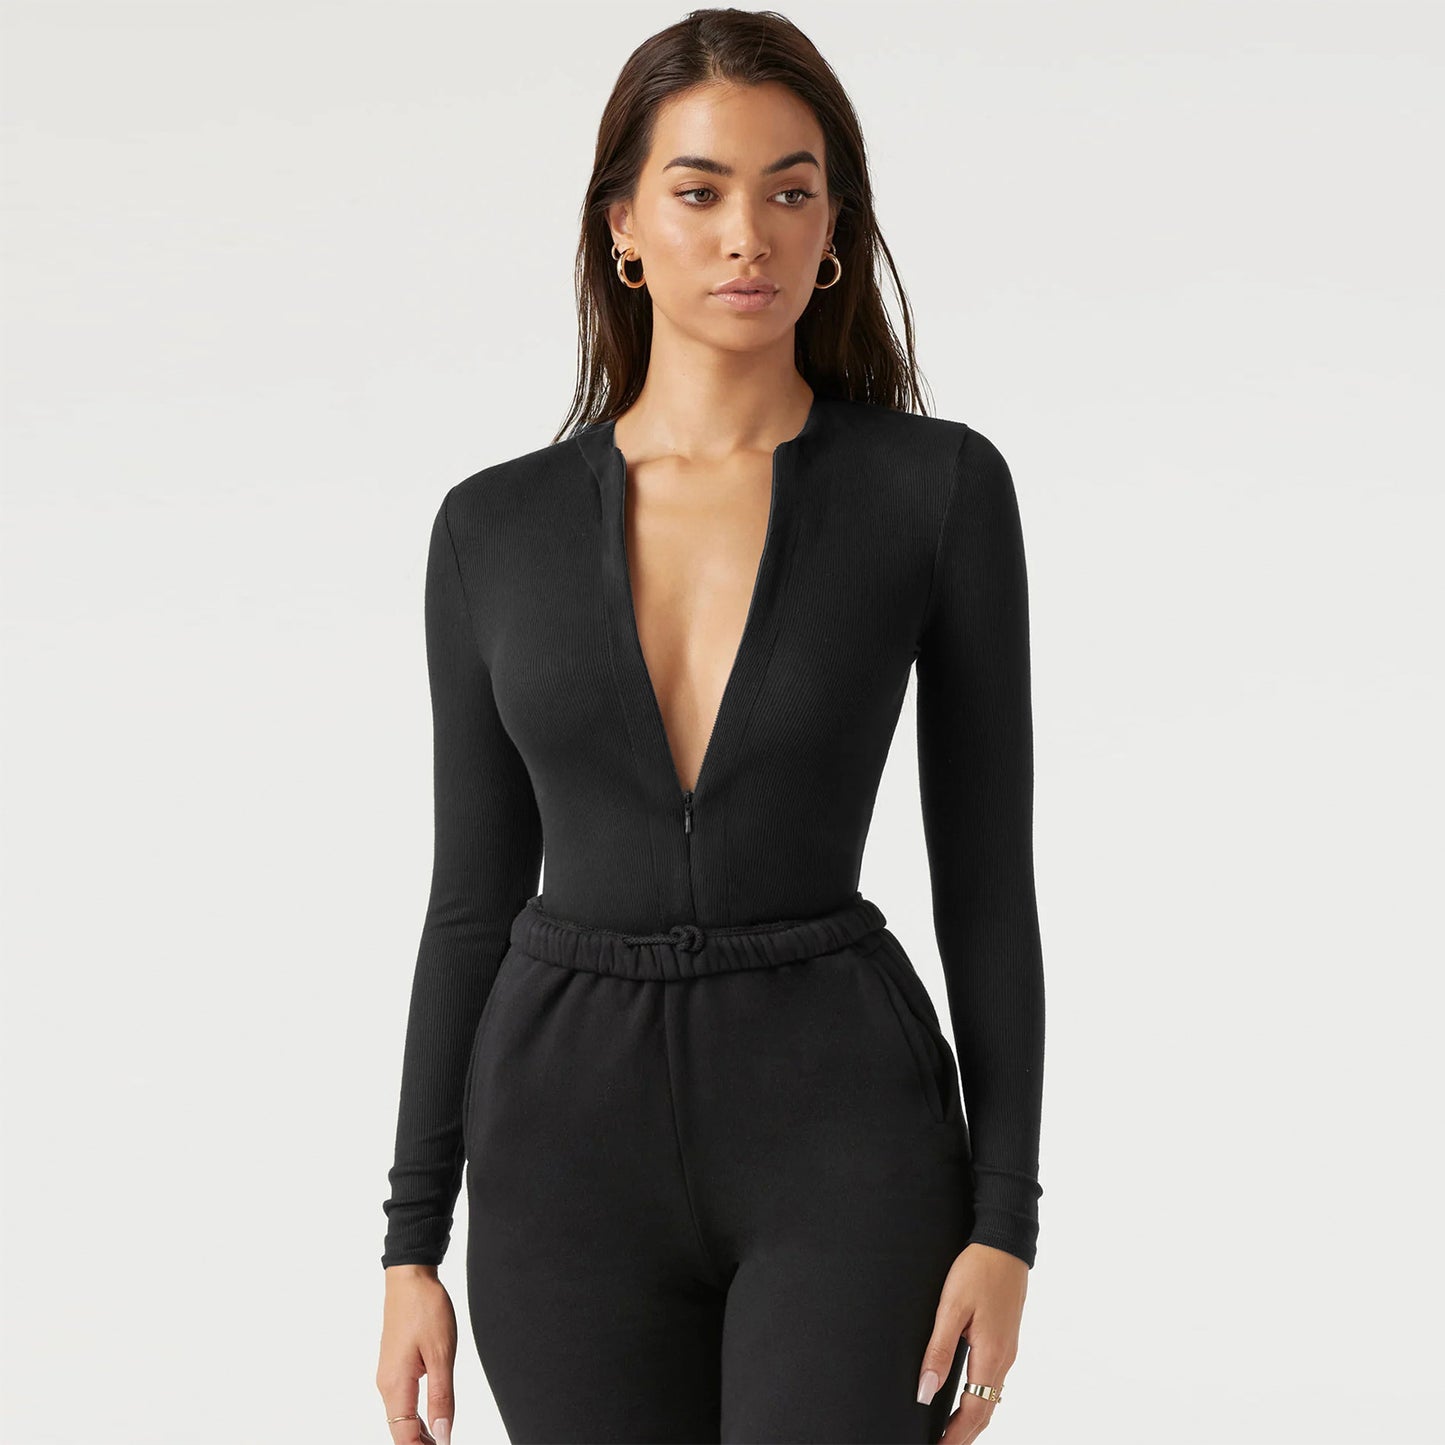 Long Sleeve Zipper Jumpsuit Fashion V-Neck Slim Fit Knitted  Corset Body Shaper Clothing For Dress Sports Yoga Romper